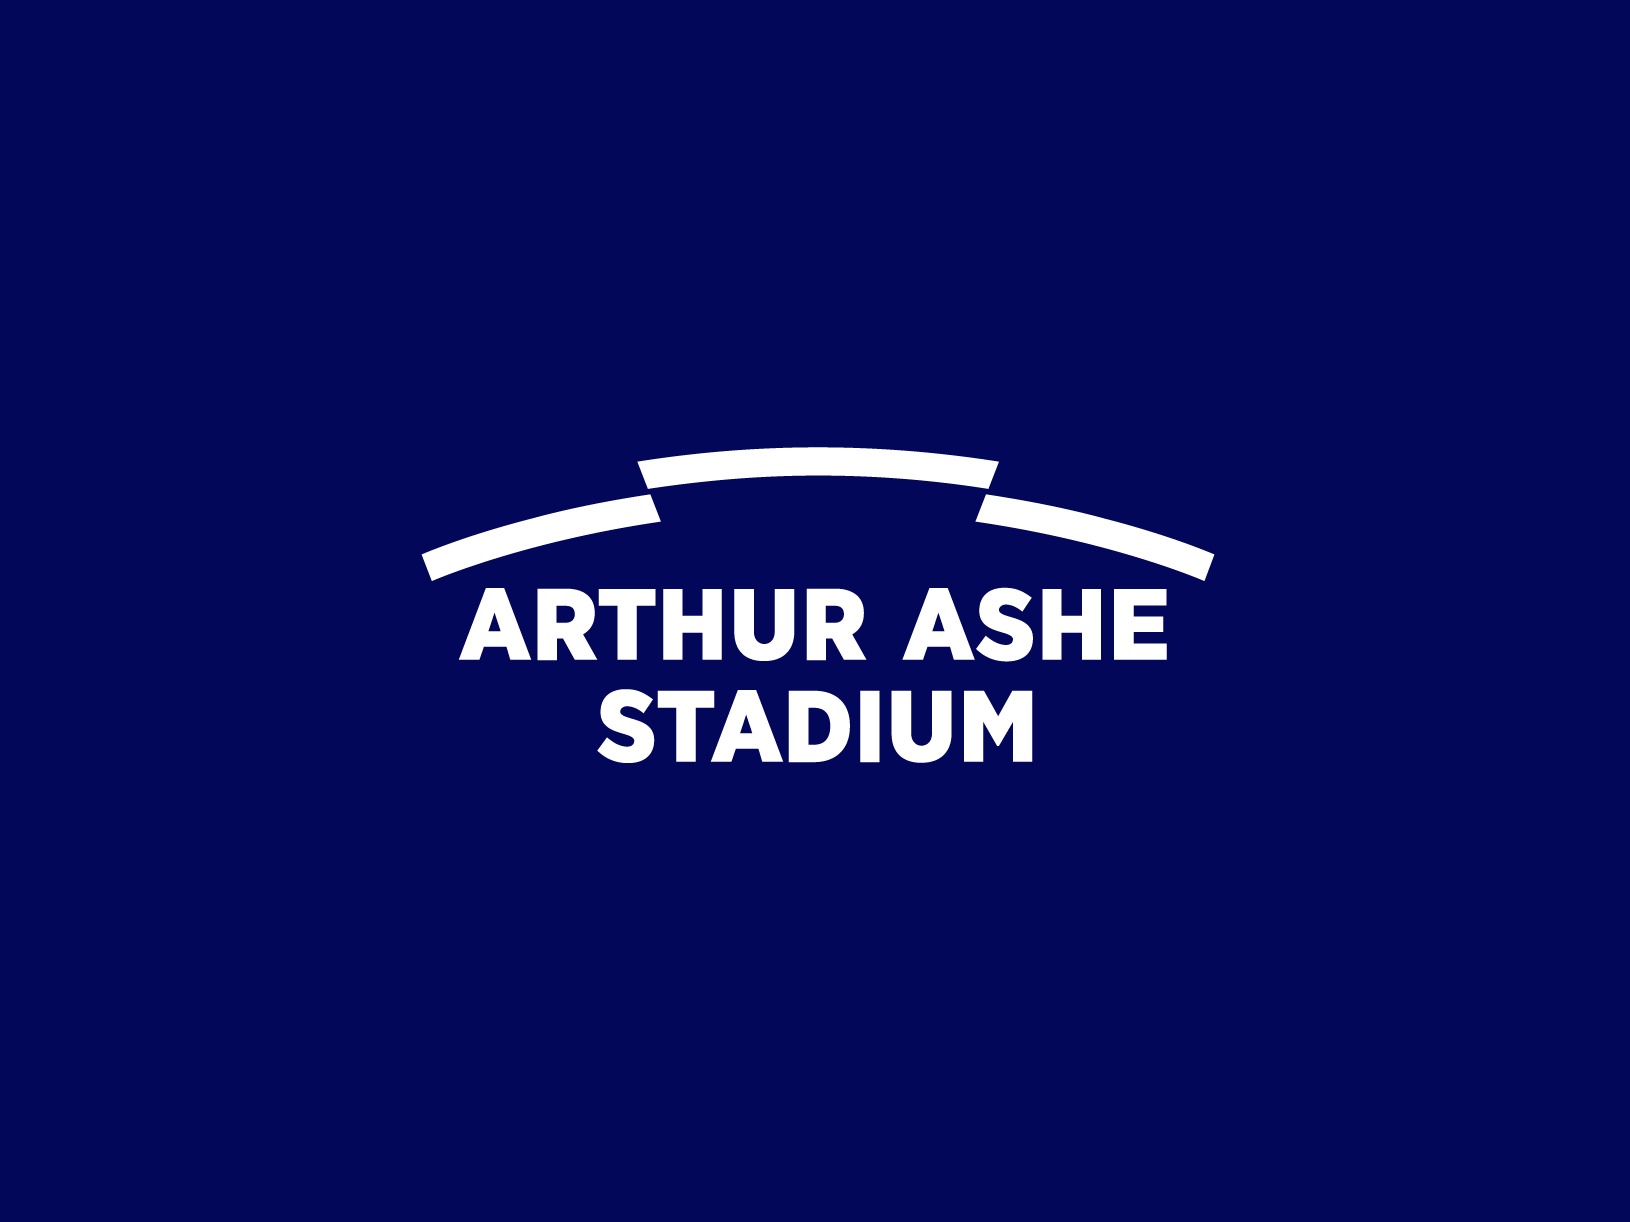 Arthur Ashe Stadium 亚瑟·阿什球场